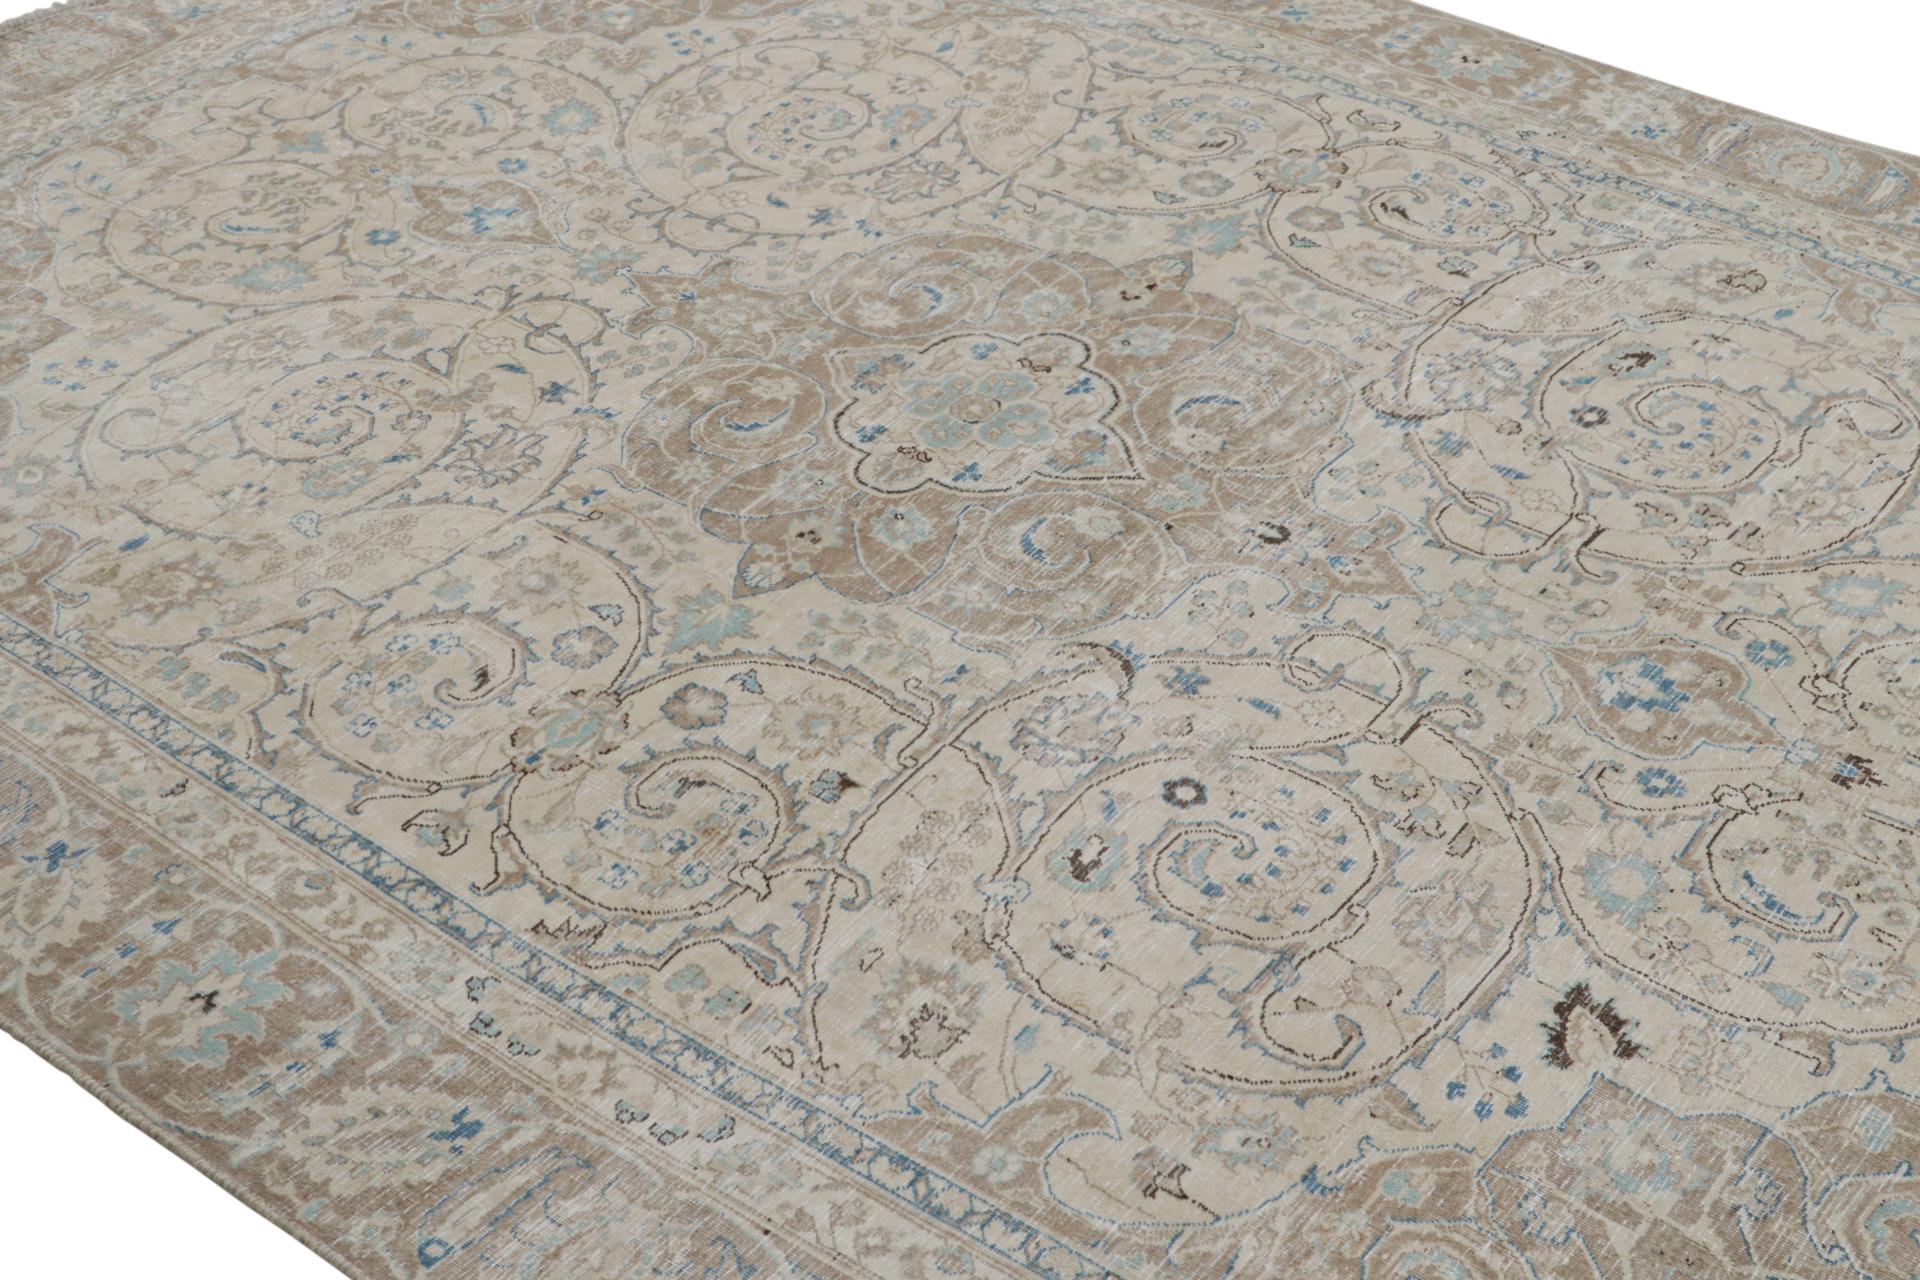 Hand-Knotted Vintage Tabriz rug in Beige, Brown and Blue Floral Patterns by Rug & Kilim For Sale